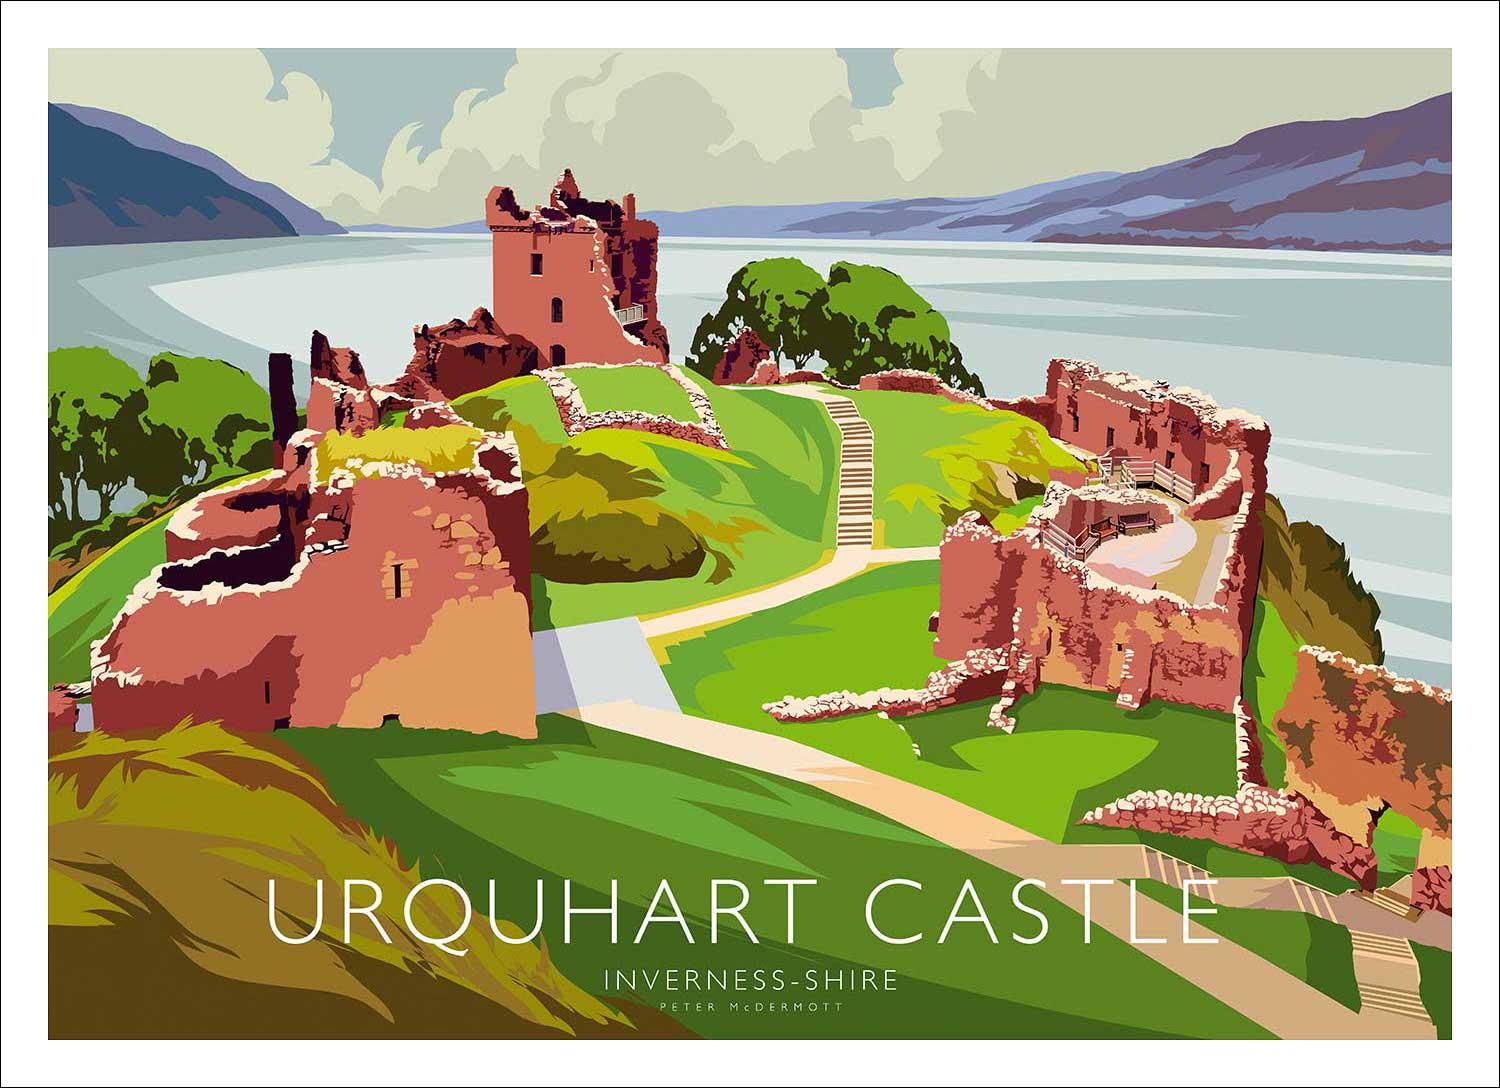 Urquhart Castle Art Print from an original illustration by artist Peter McDermott